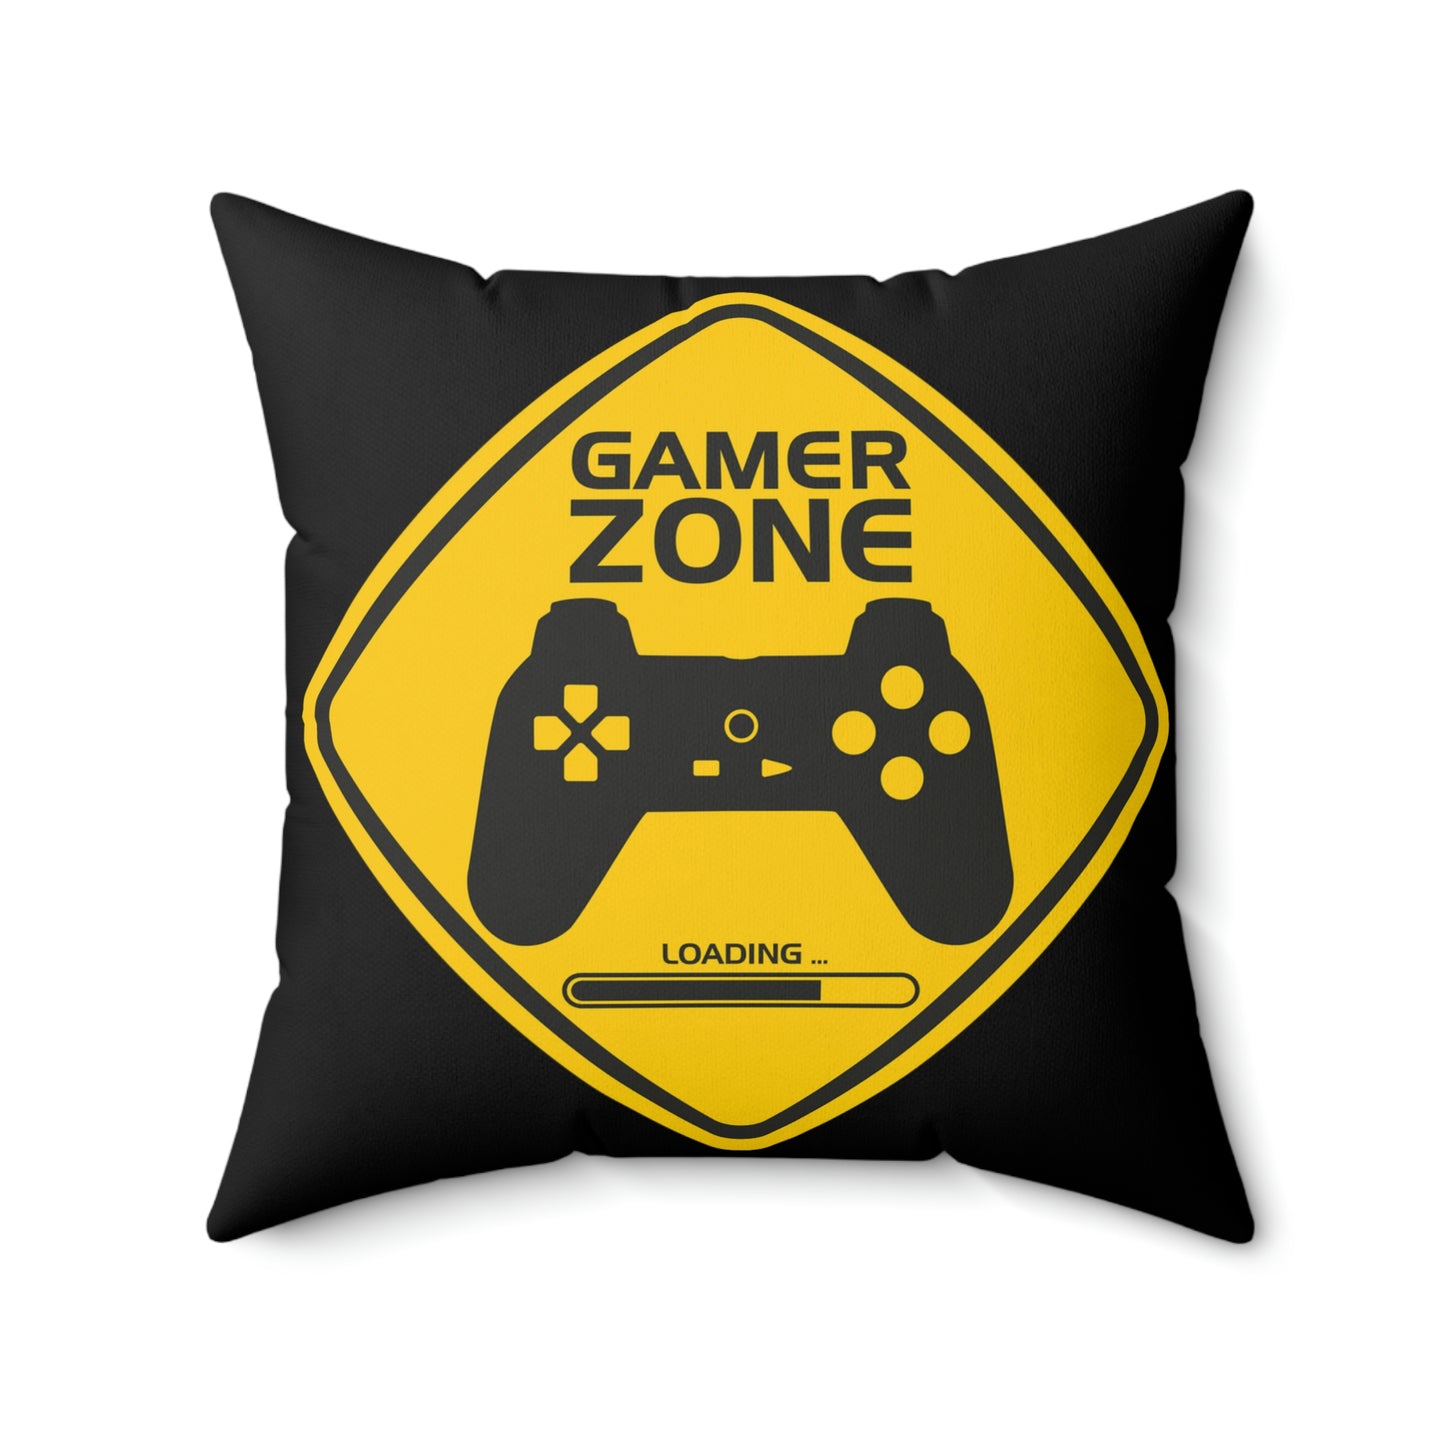 Gamer Zone Spun Polyester Square Pillow